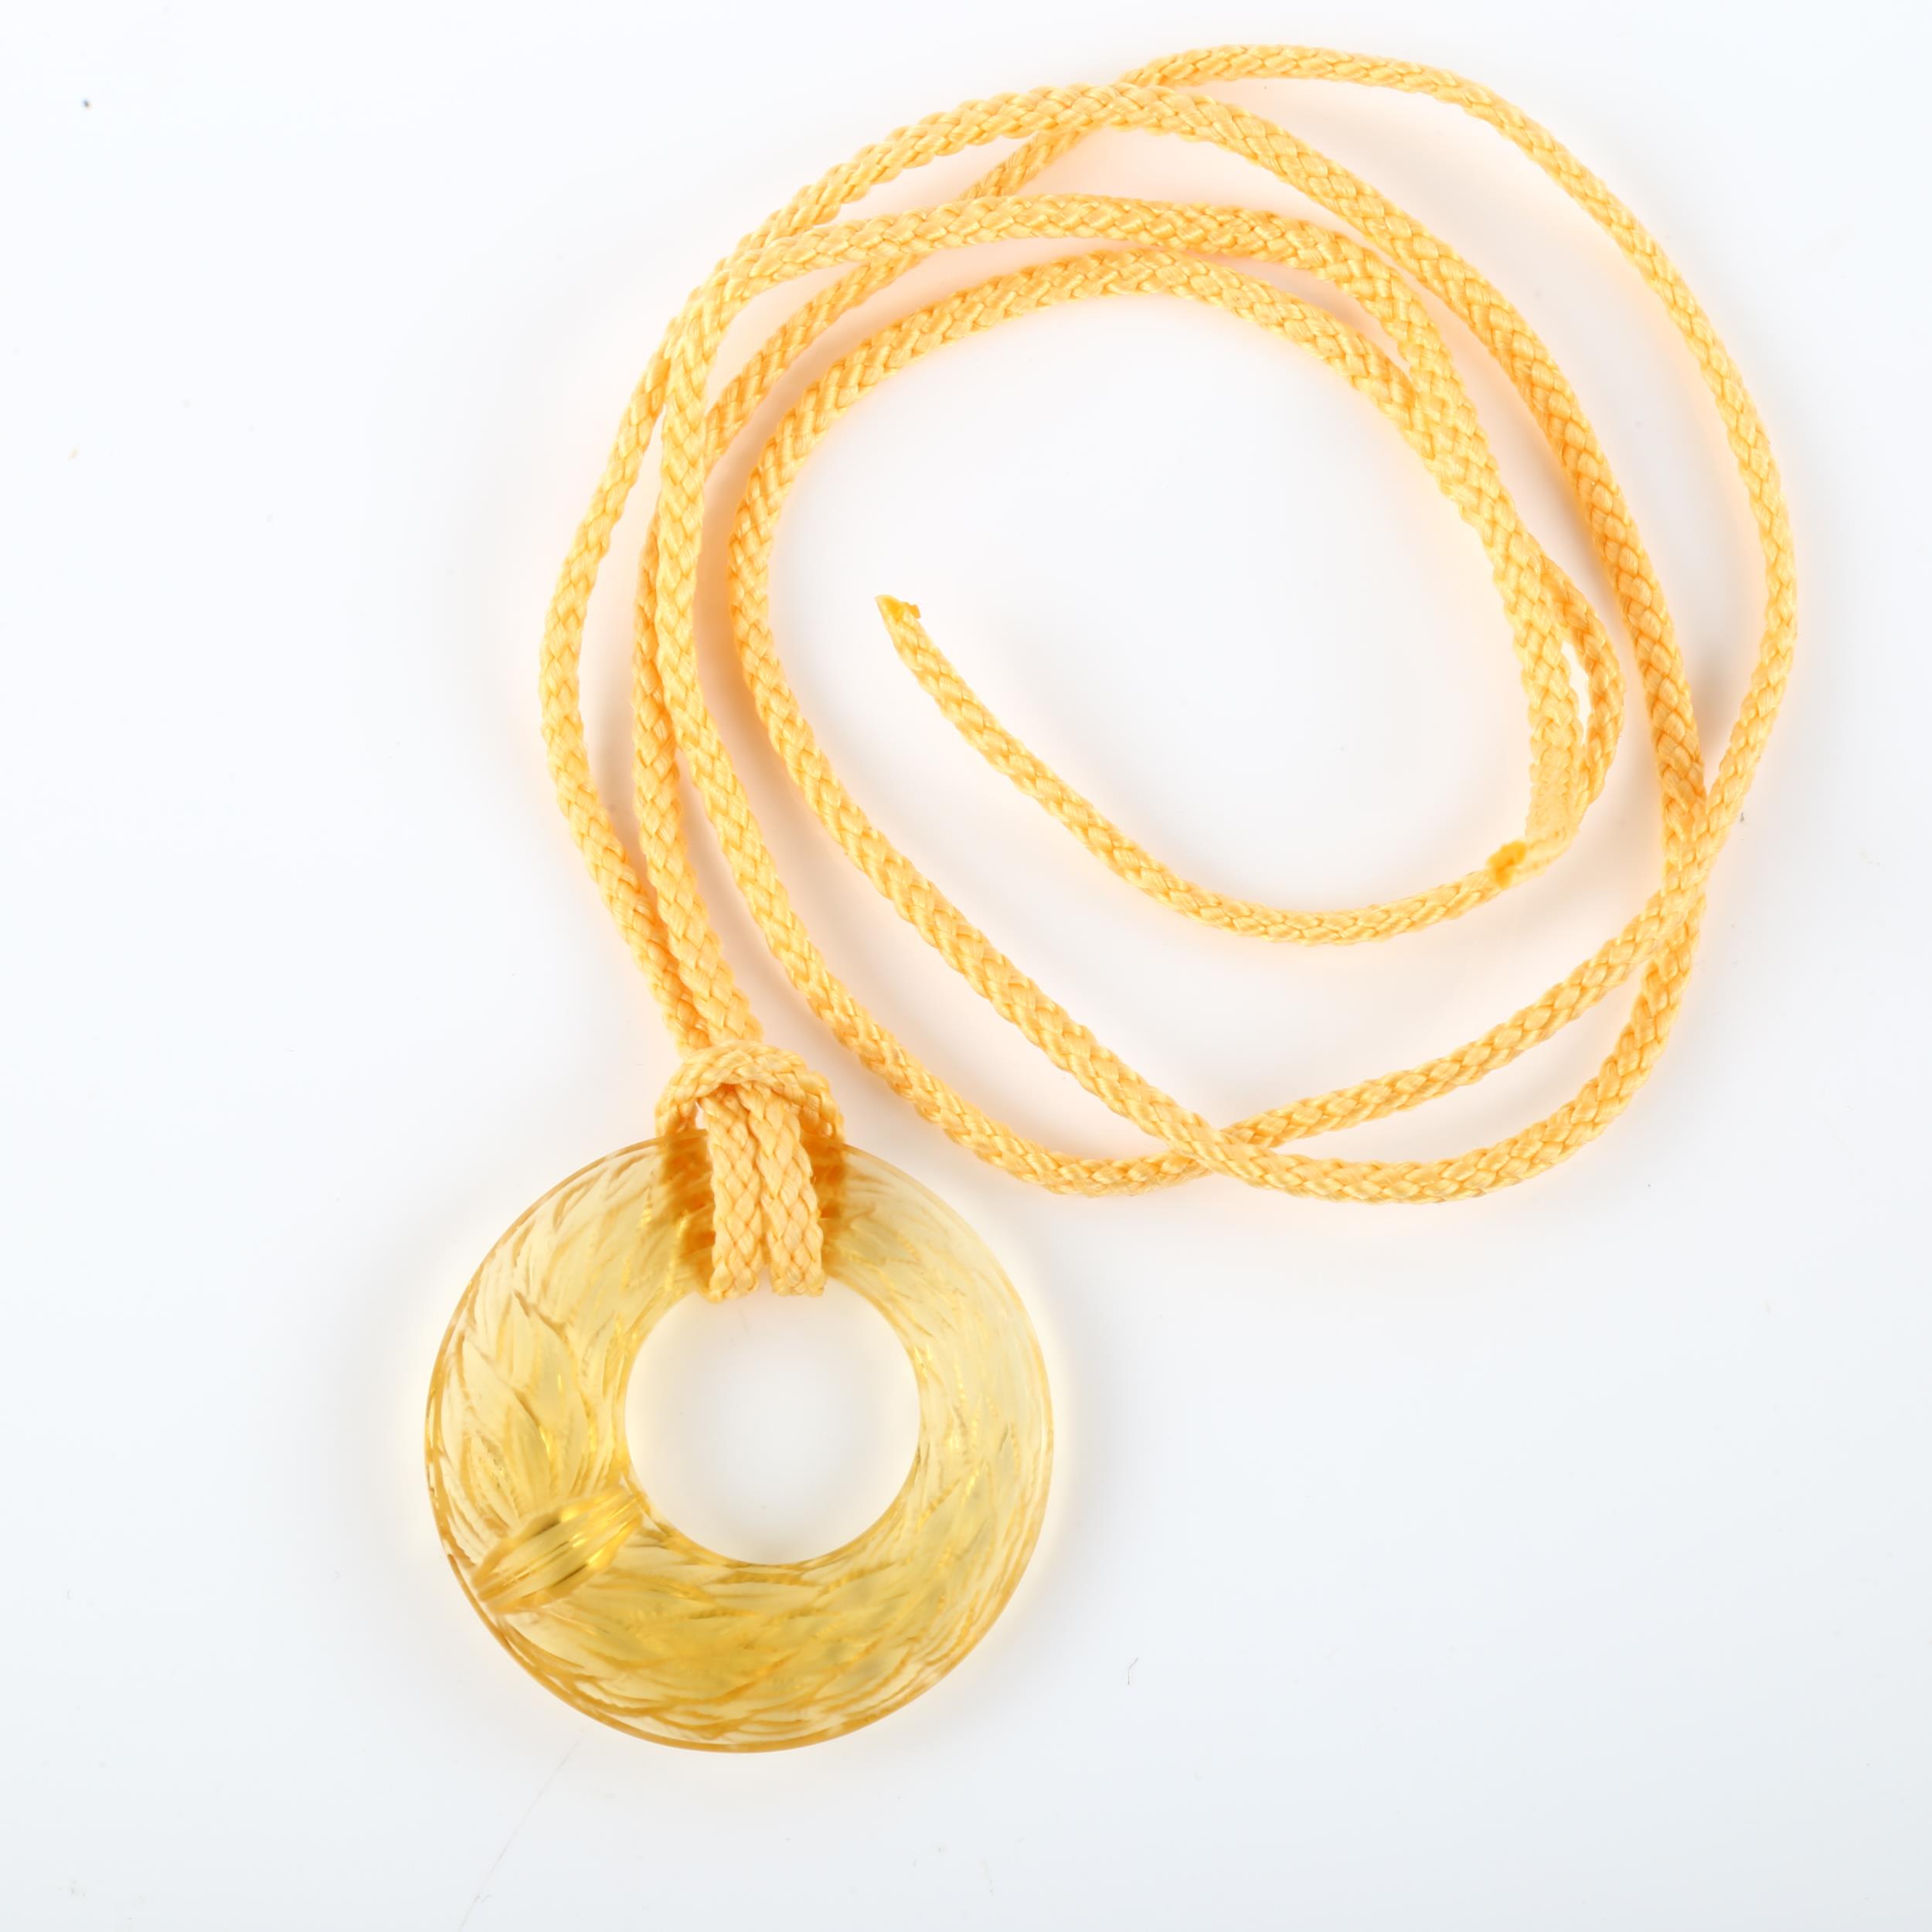 LALIQUE - an amber glass laurel wreath disc pendant, signed Lalique France, diameter 44.1mm, 14. - Image 3 of 6